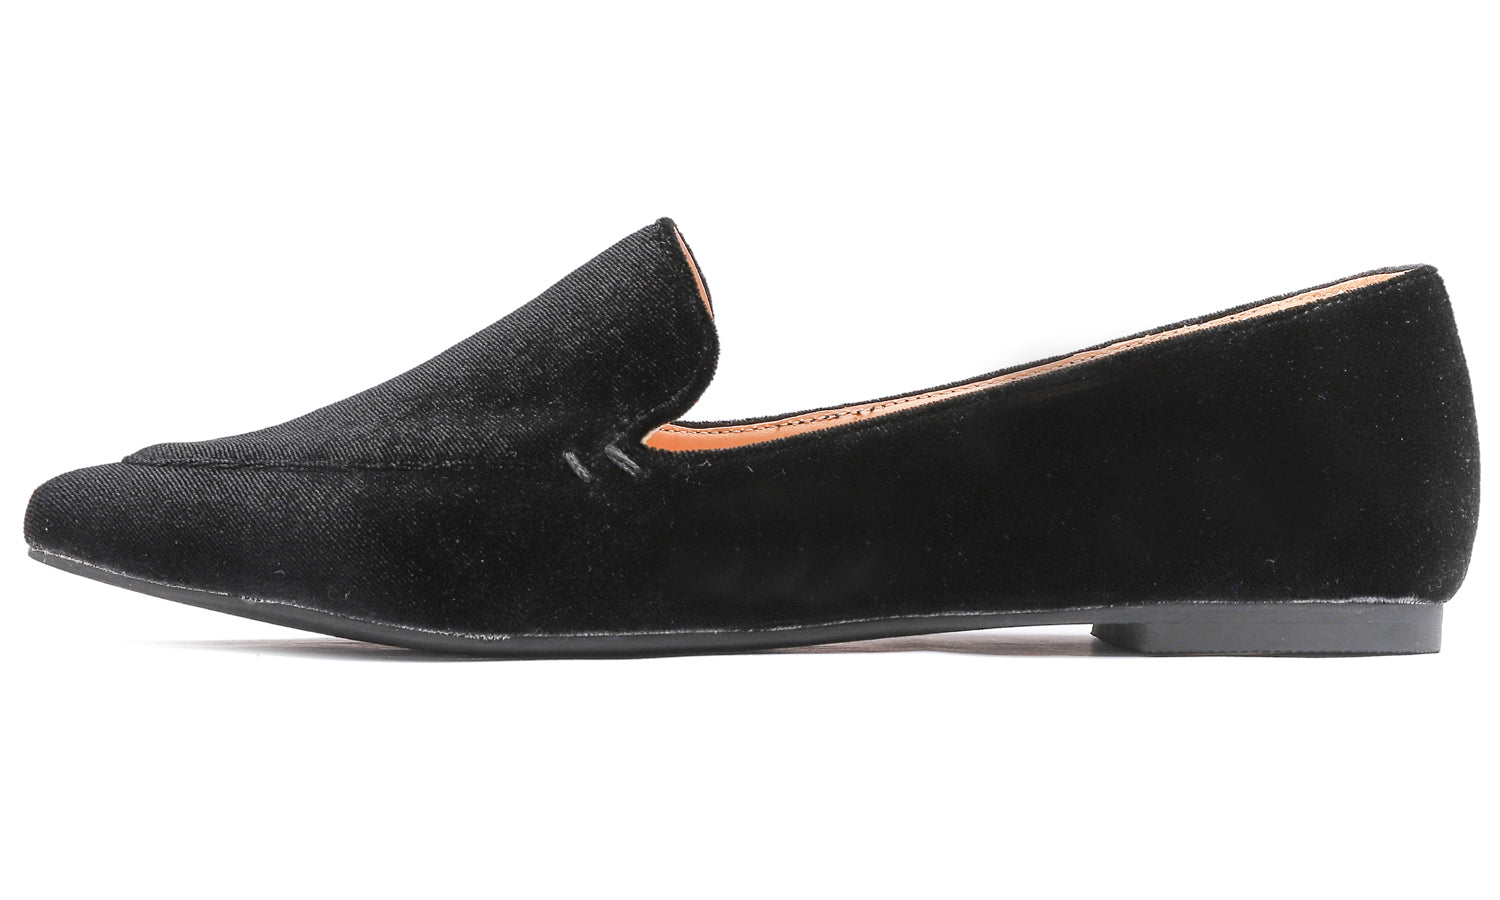 Feversole Women's Loafer Flat Pointed Fashion Slip On Comfort Driving Office Shoes Black Velvet